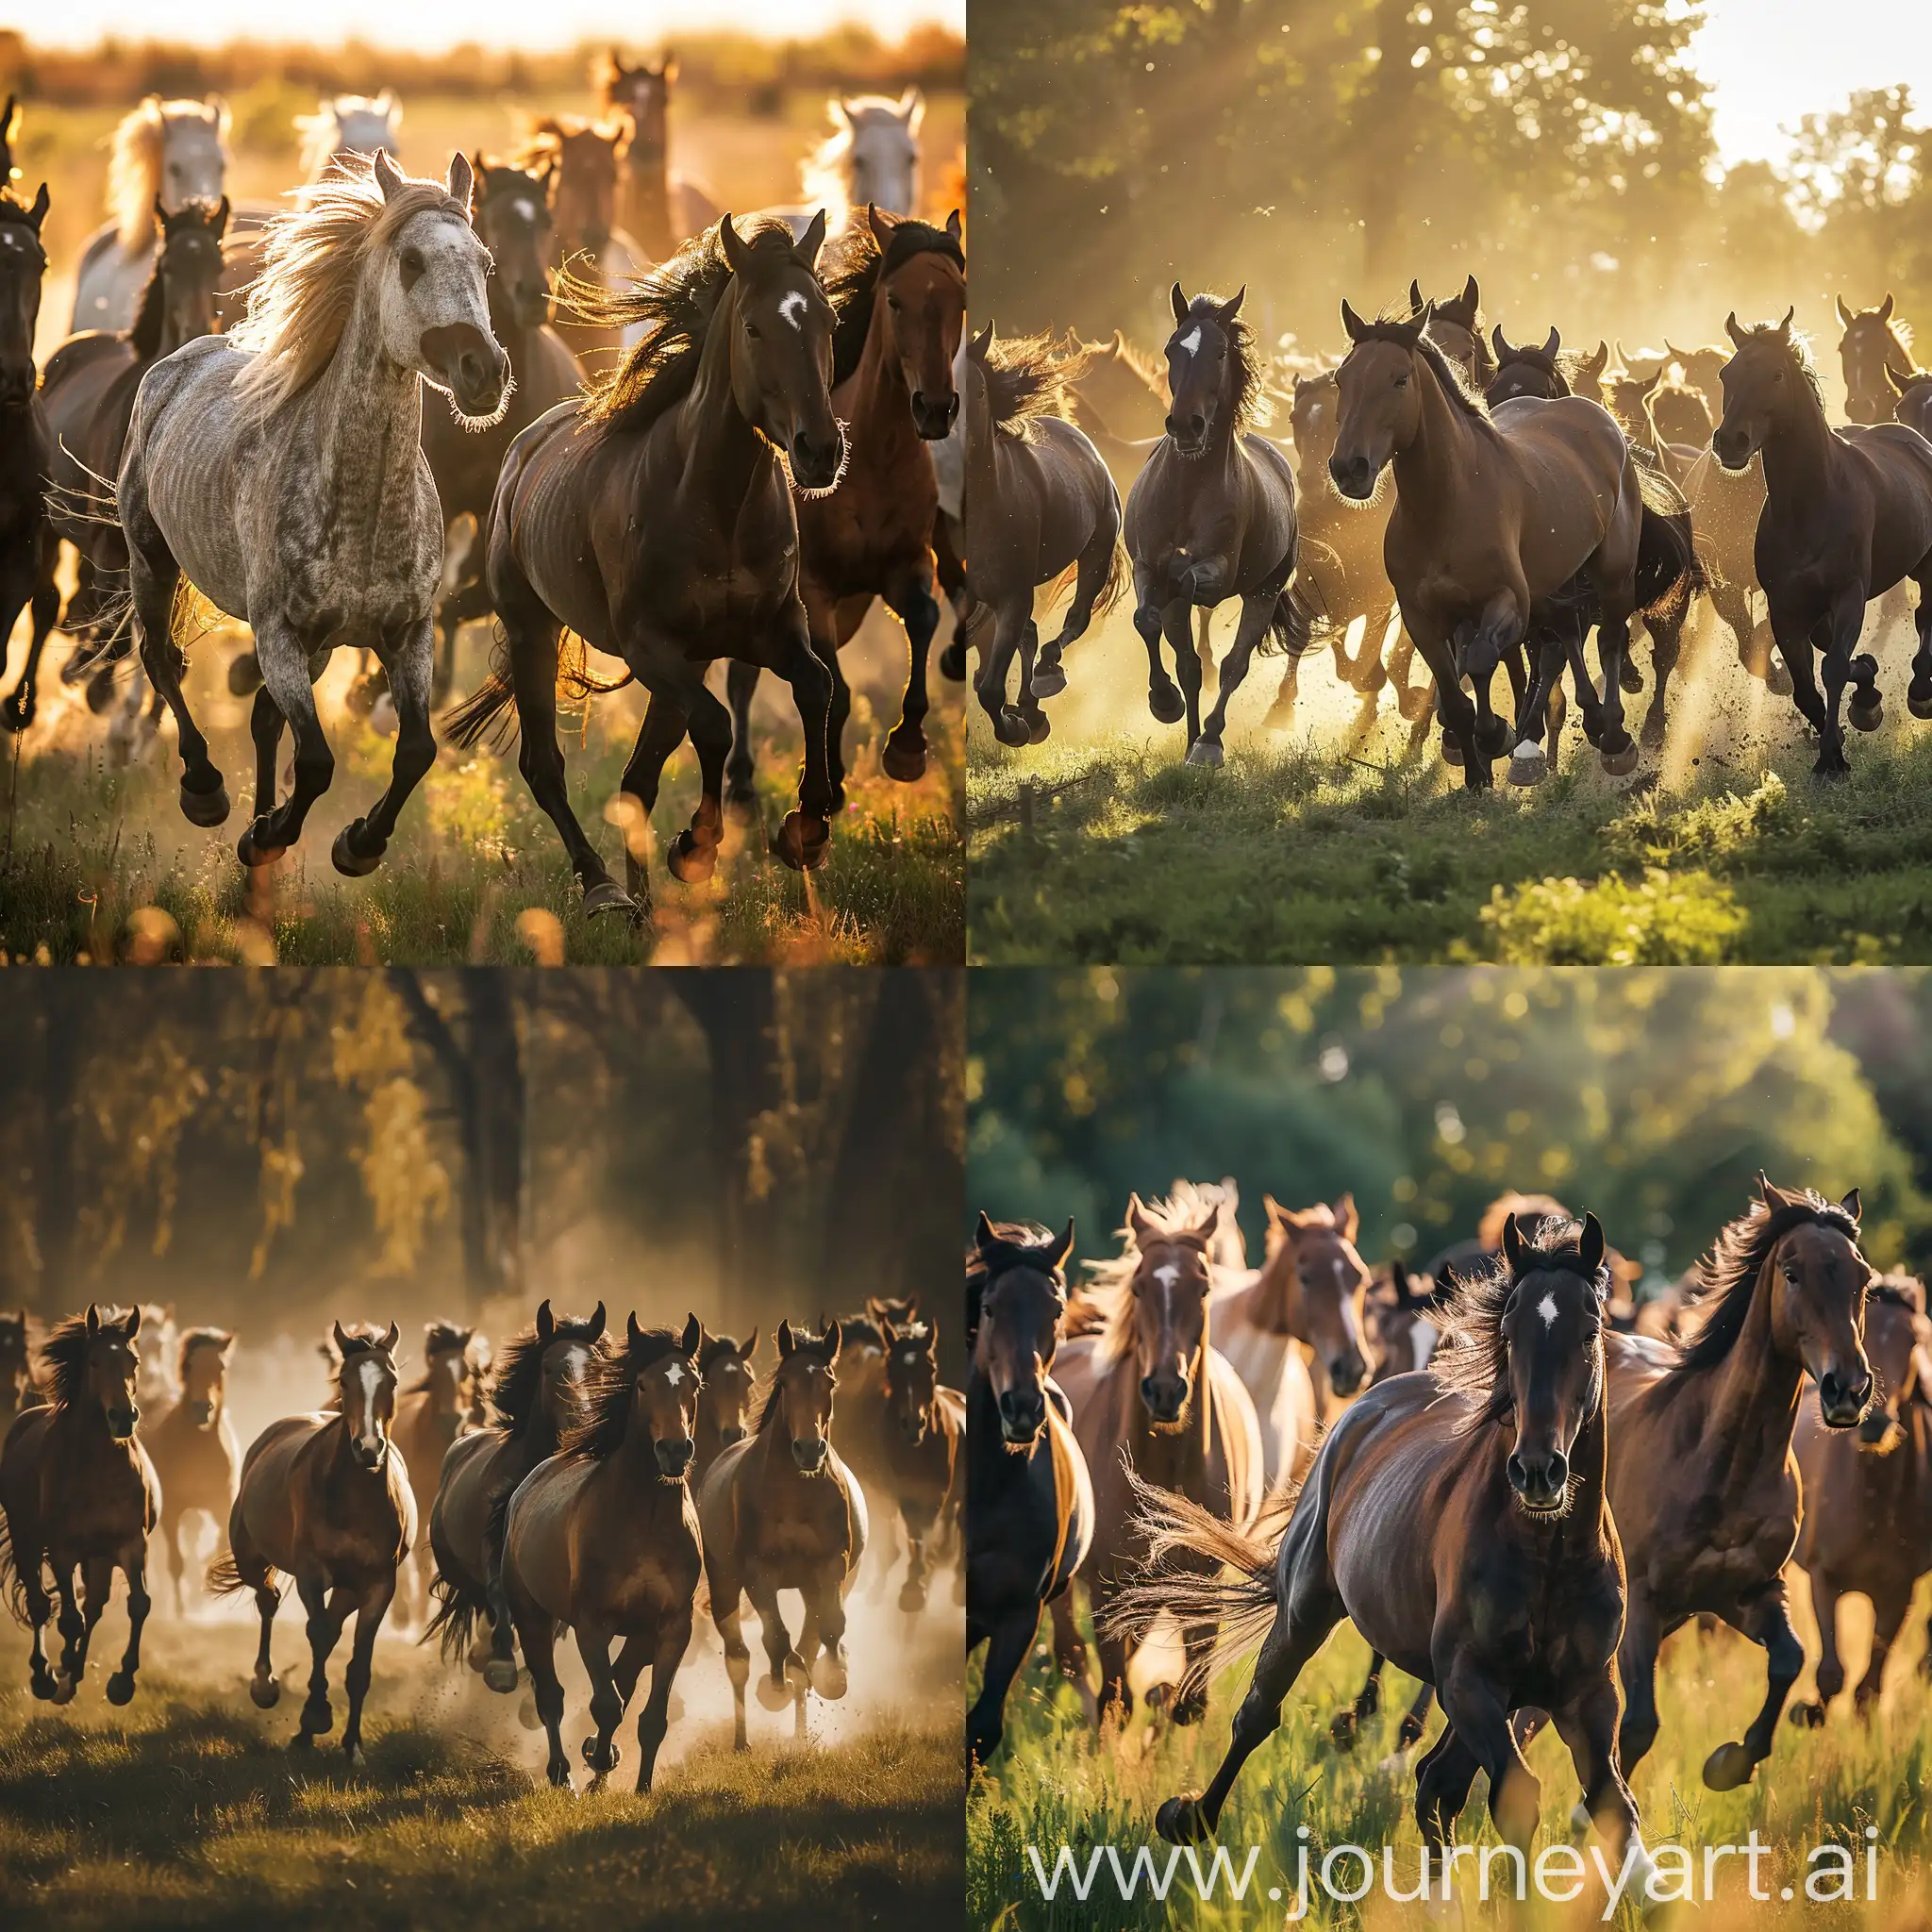 Galloping-Horses-Enjoying-Sunshine-in-a-Vast-Landscape